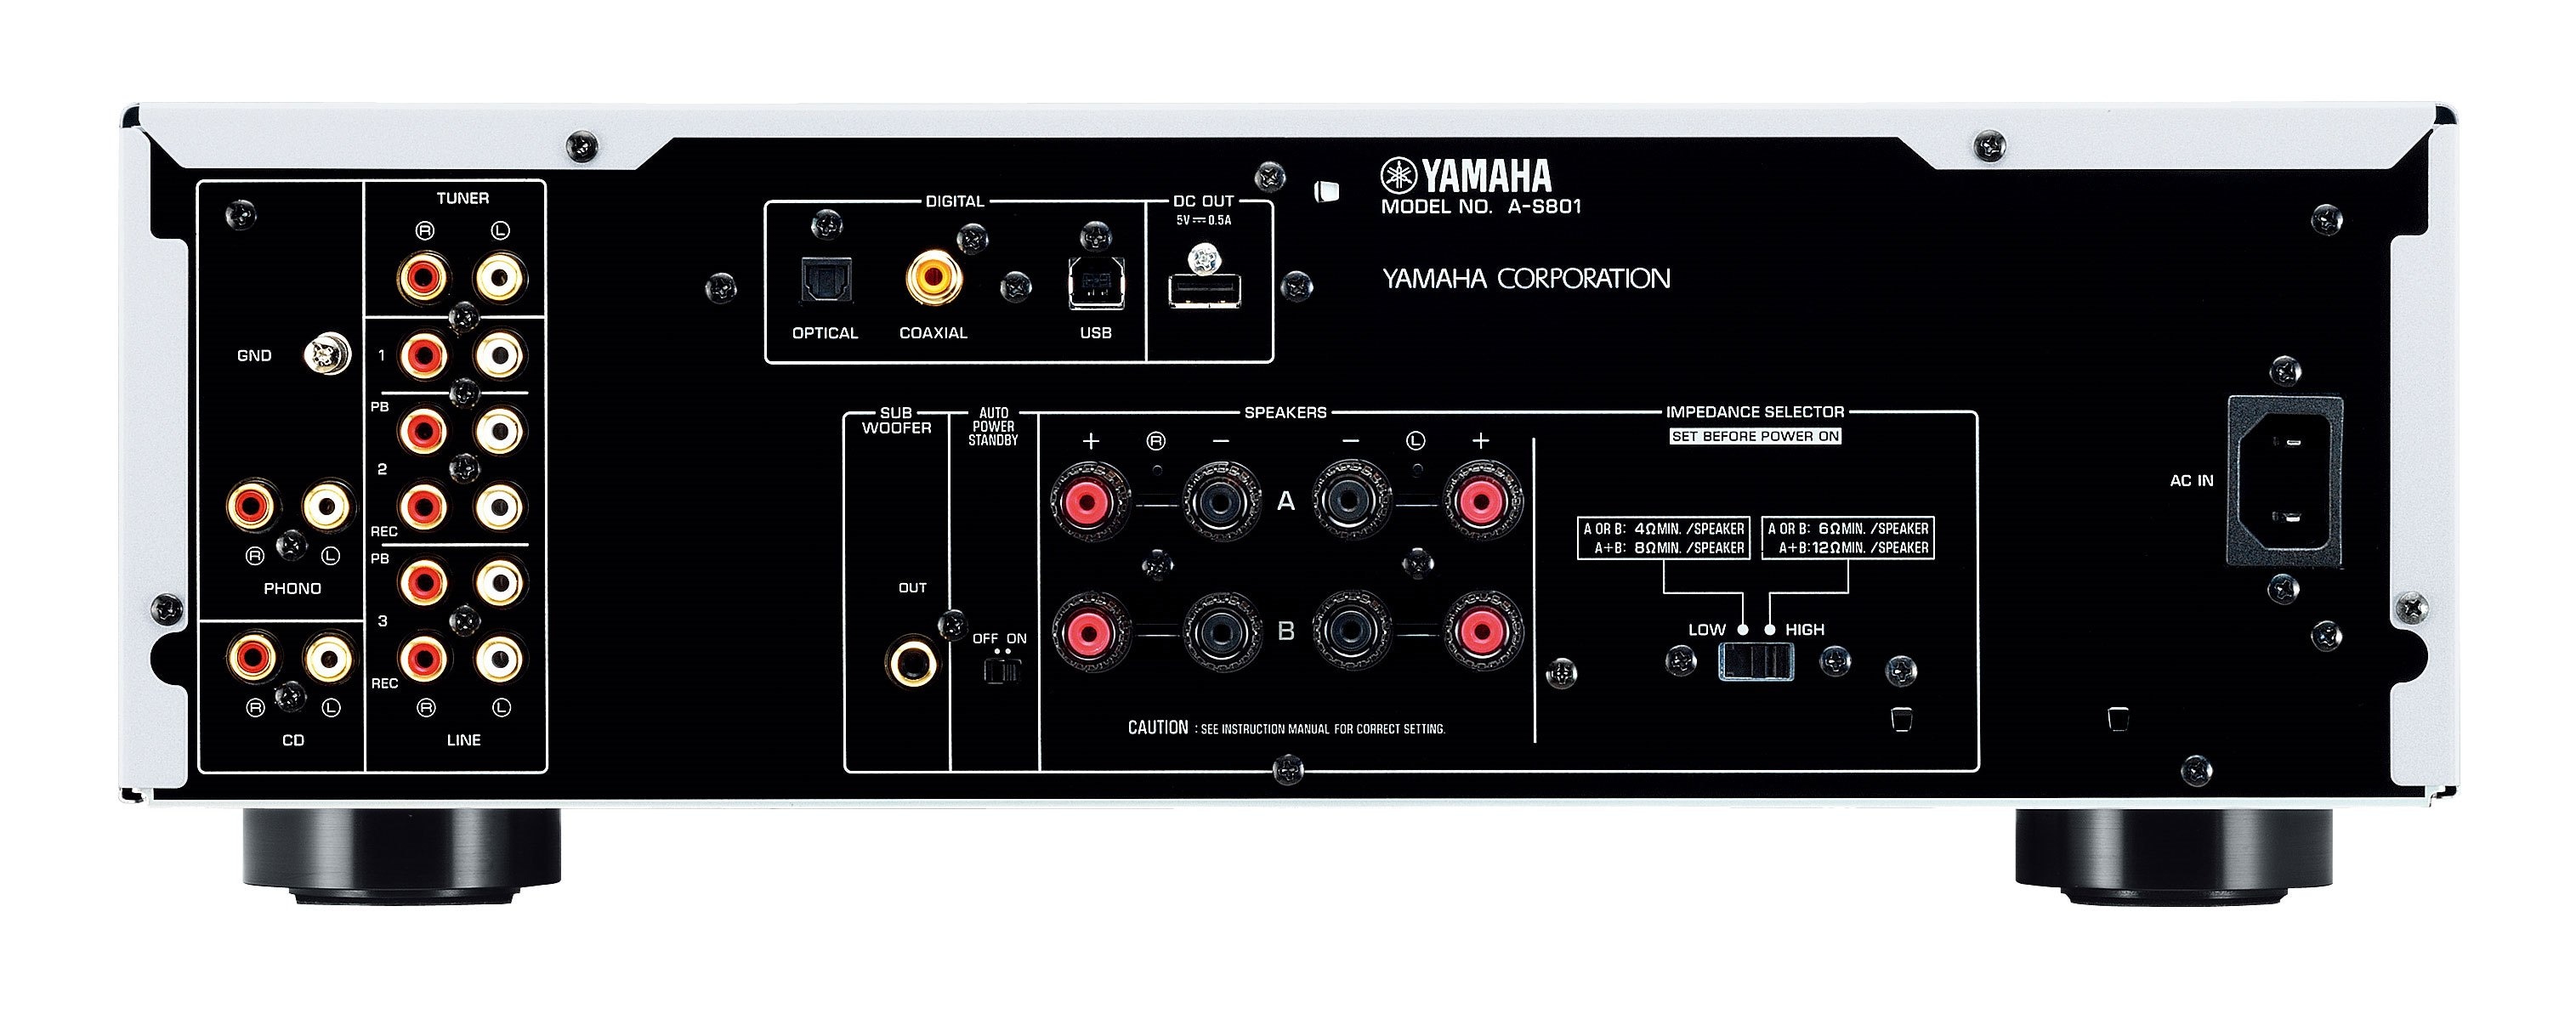 A-S801 - Downloads - Hi-Fi - Audio & Visual - Products - Yamaha - United States